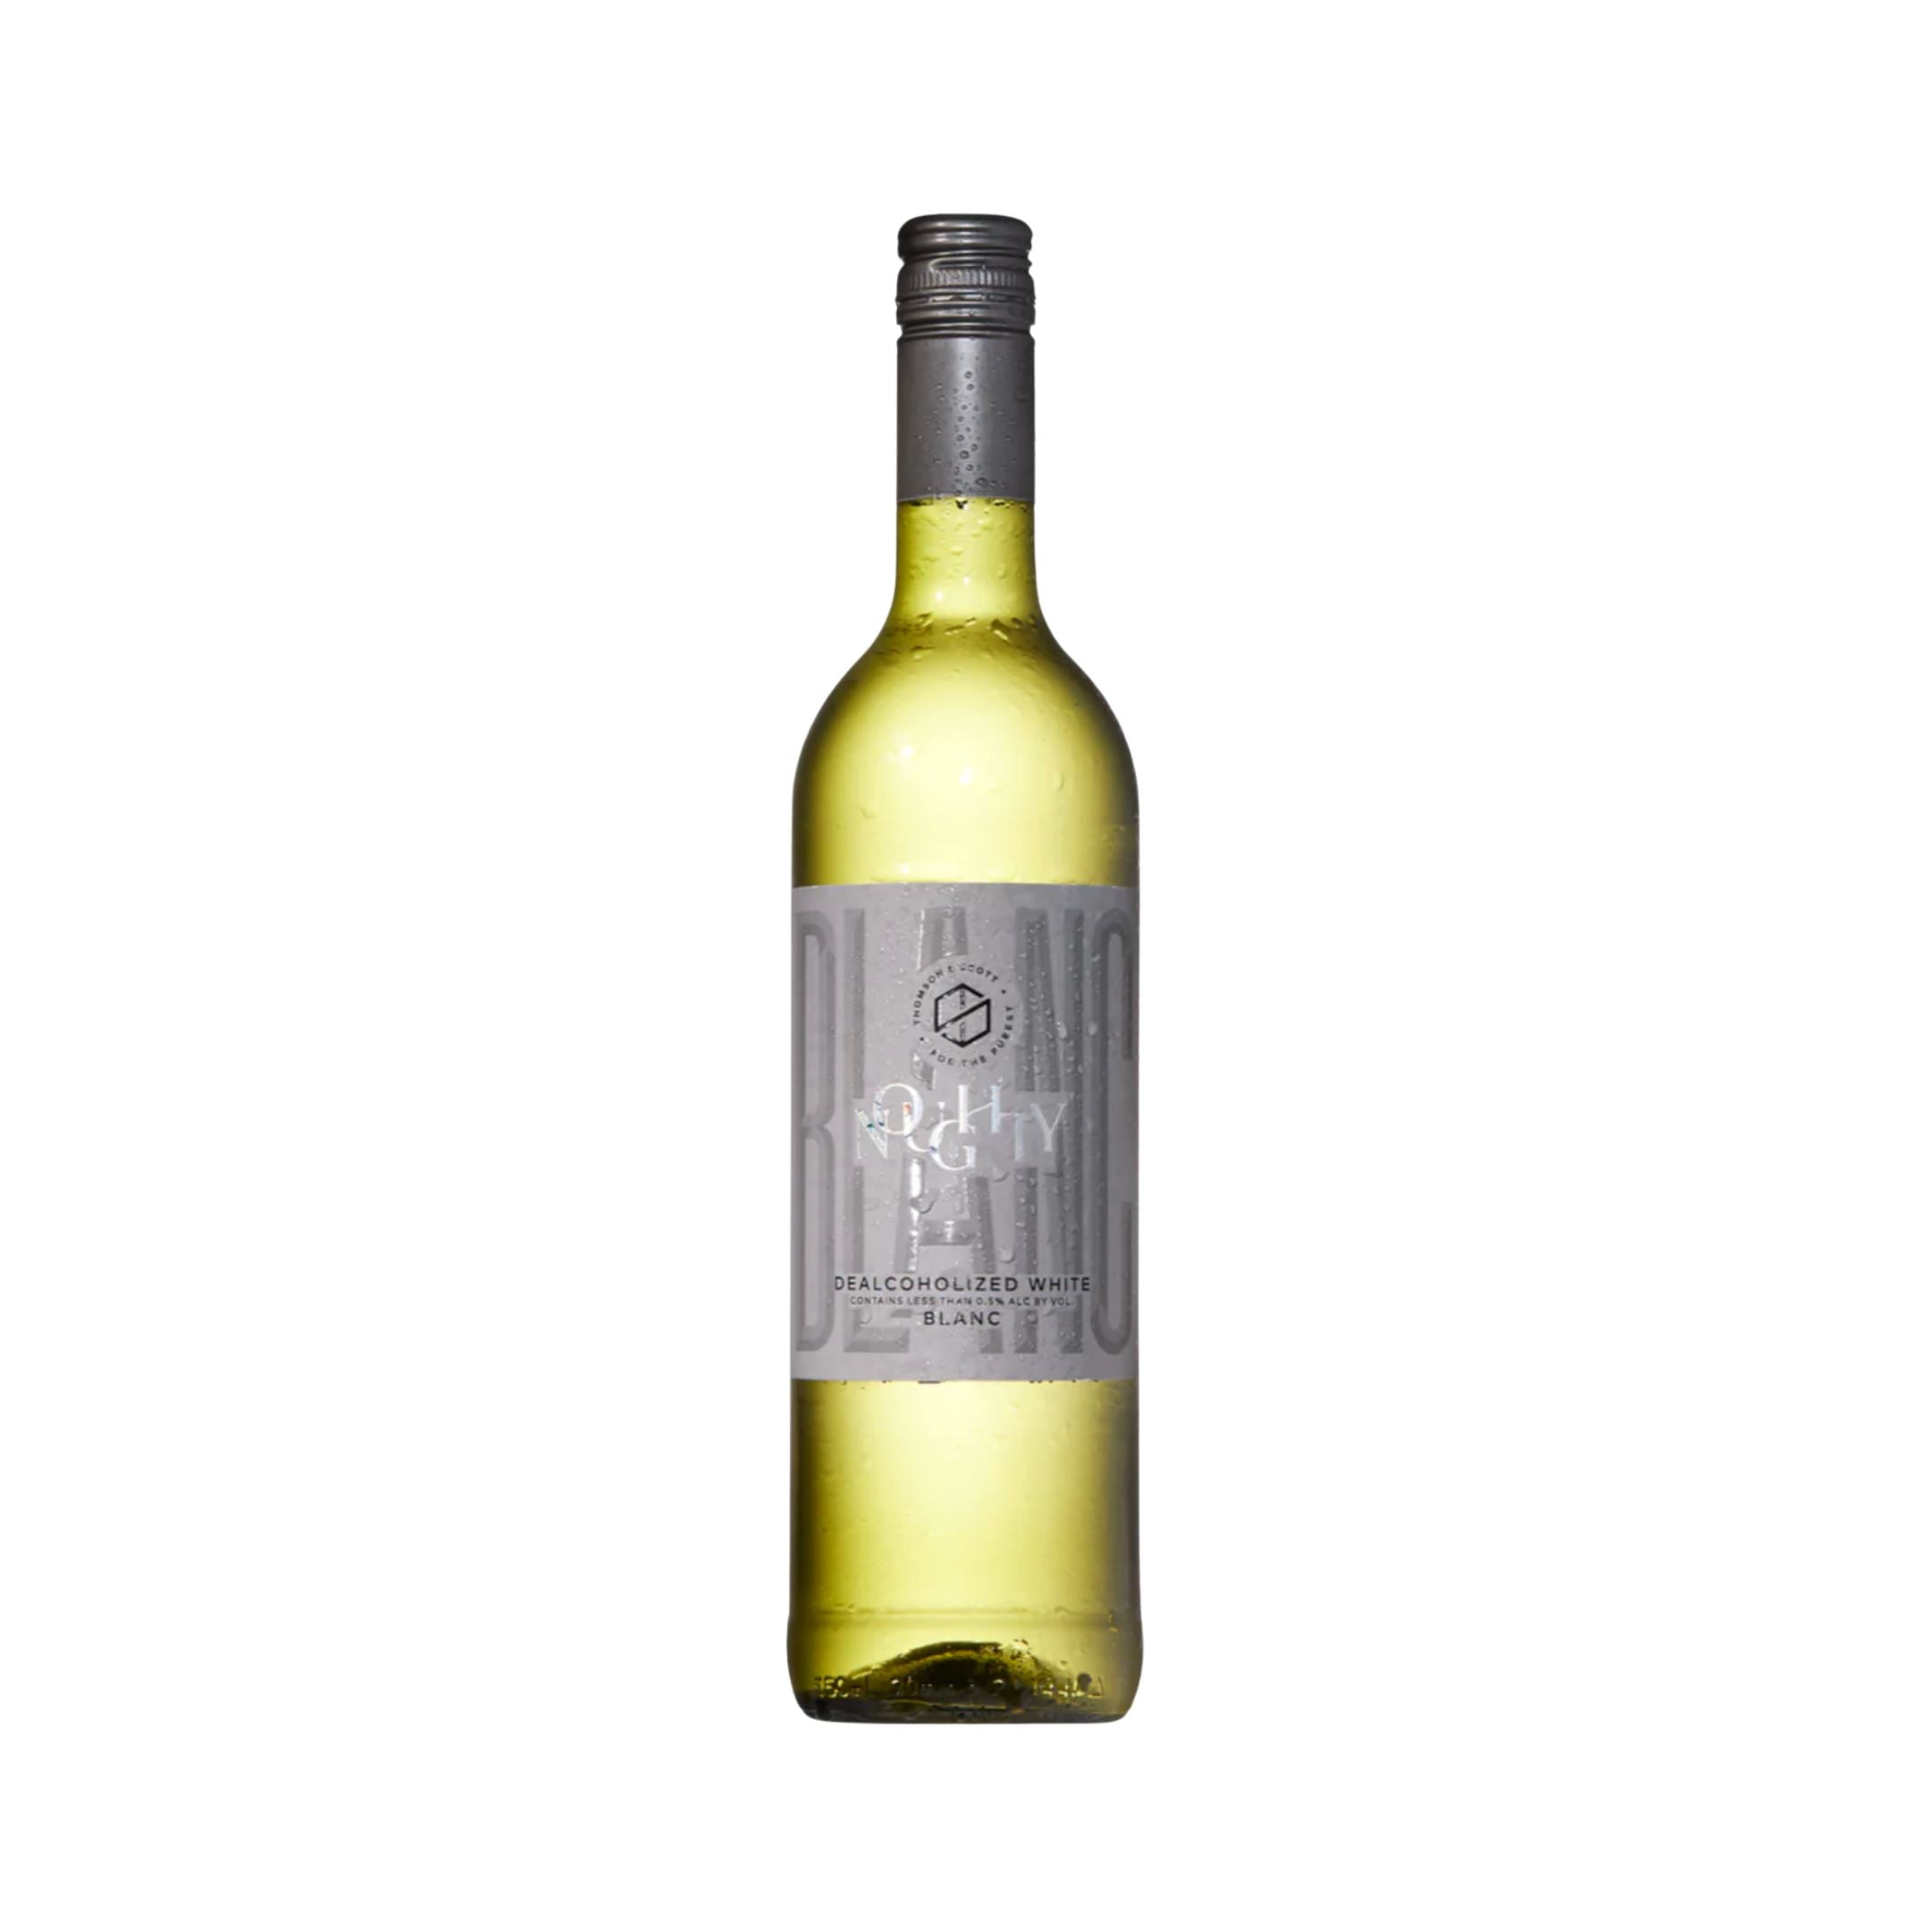 THOMSON & SCOTT Noughty Blanc - Dealcoholised still wine The Online Wine Tasting Club 